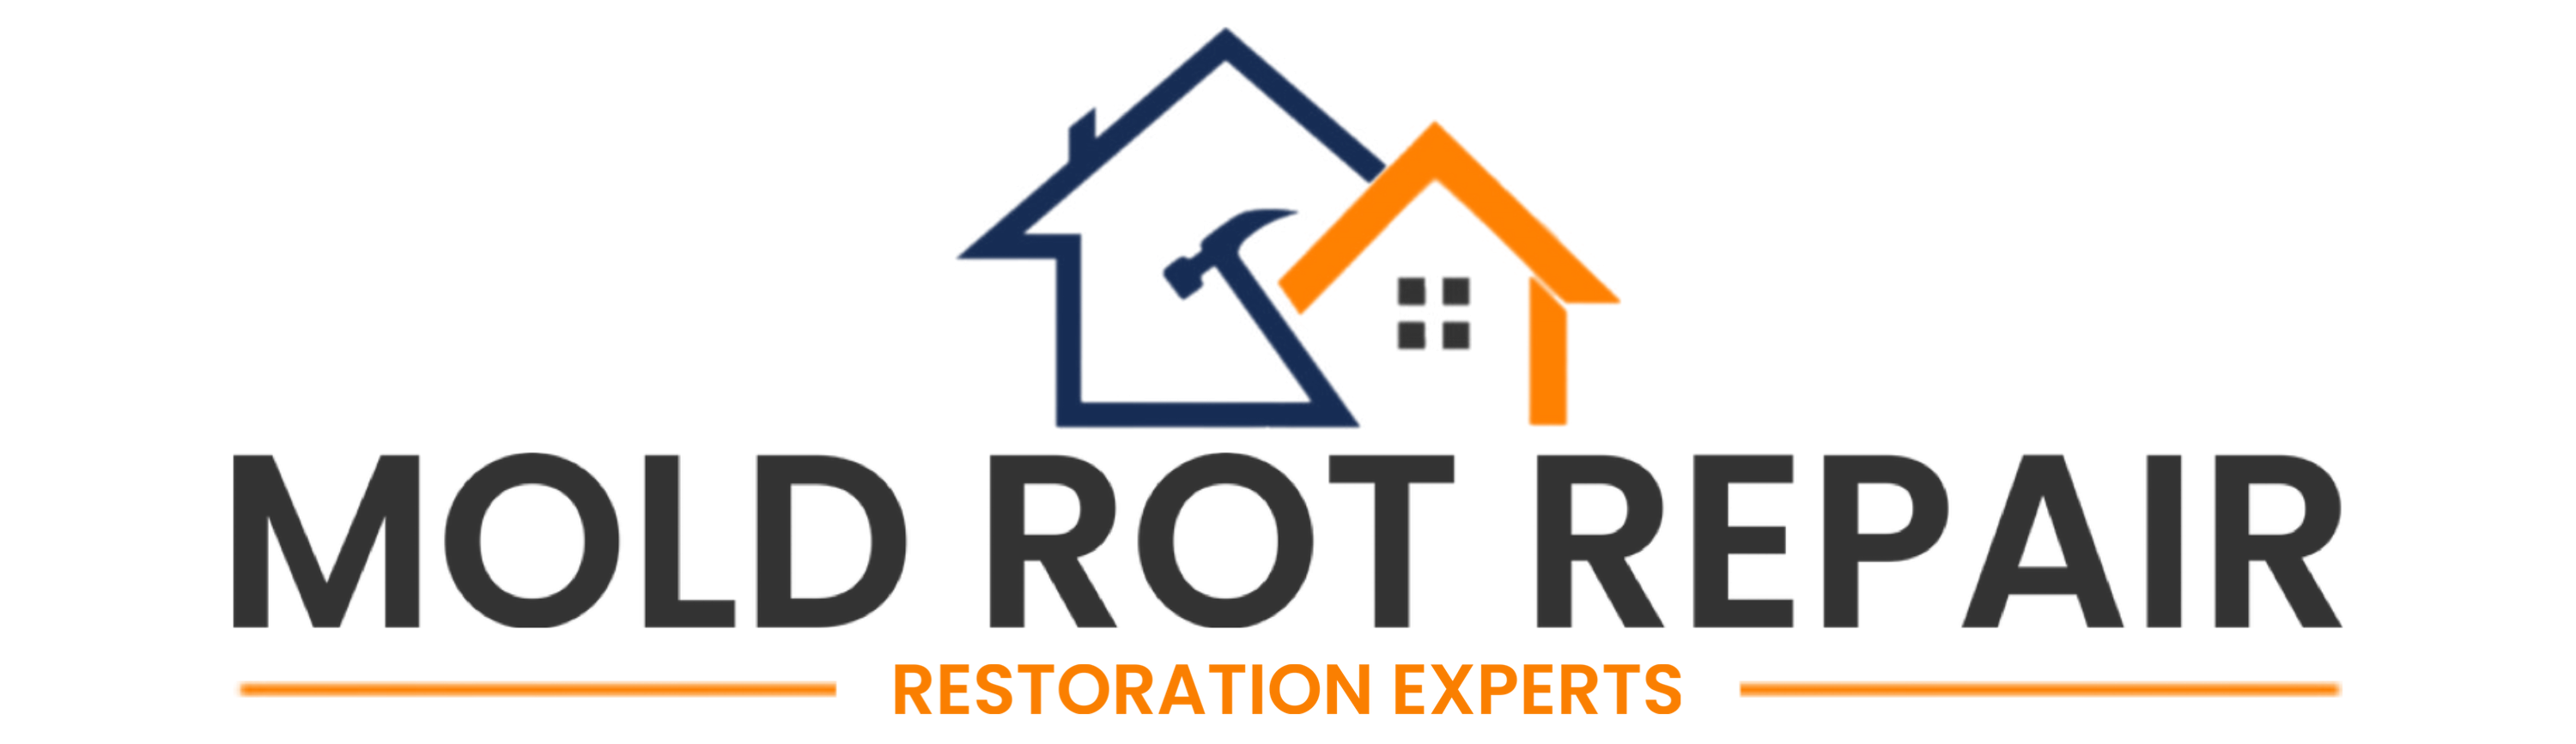 Mold Rot Repair & Remodeling